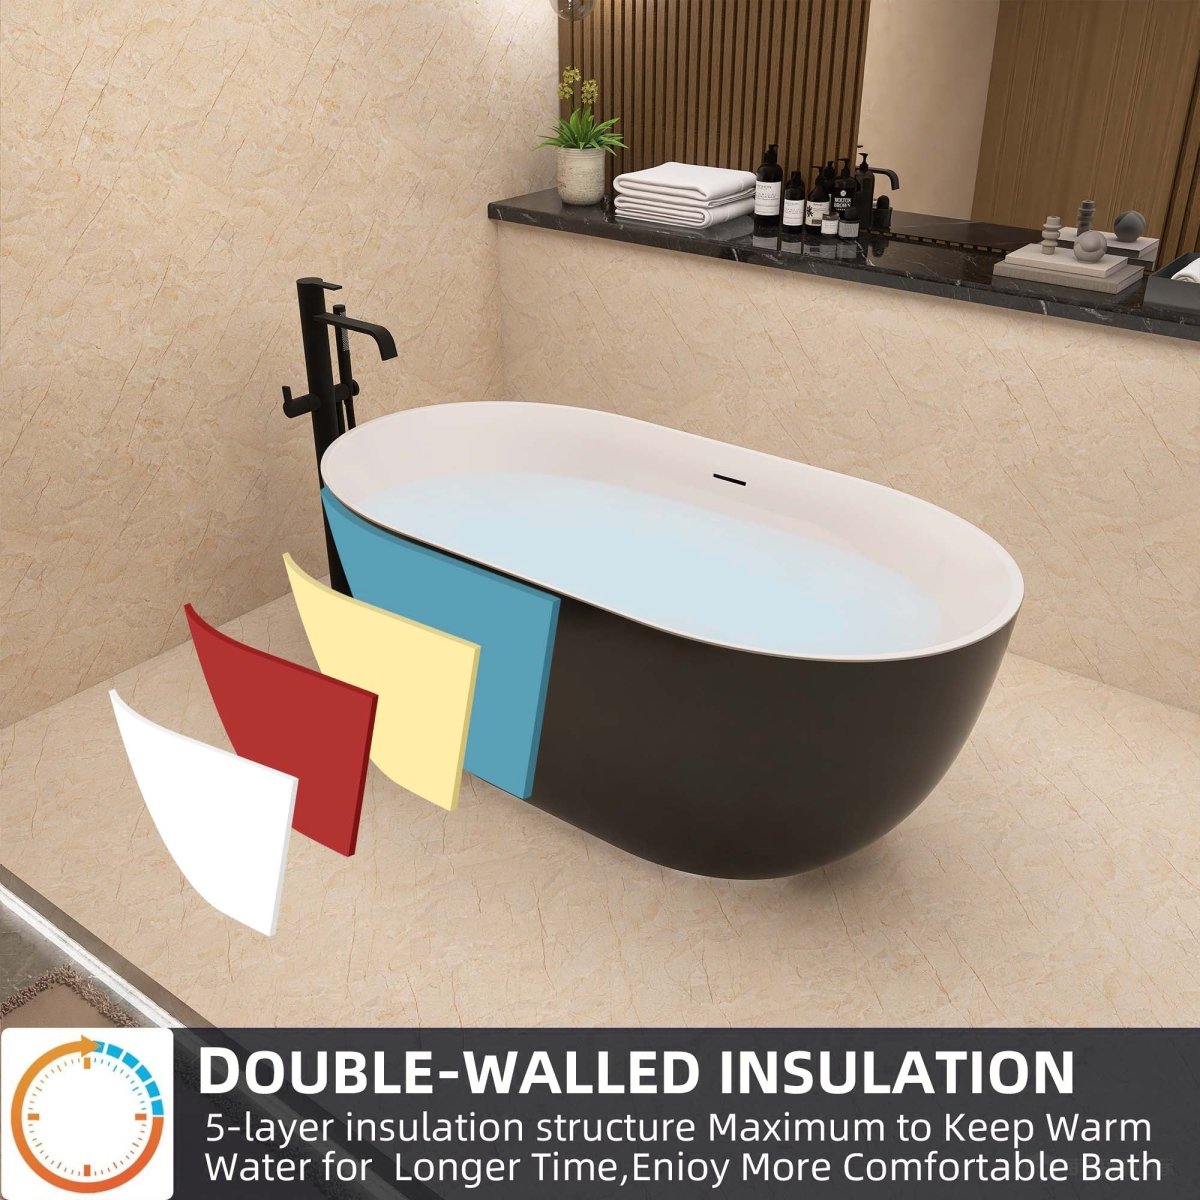 ExBrite 59" Acrylic Bathtub Free Standing Tub Oval Shape Soaking Tub Adjustable Freestanding Chrome Pop-up Drain Anti-clogging Black